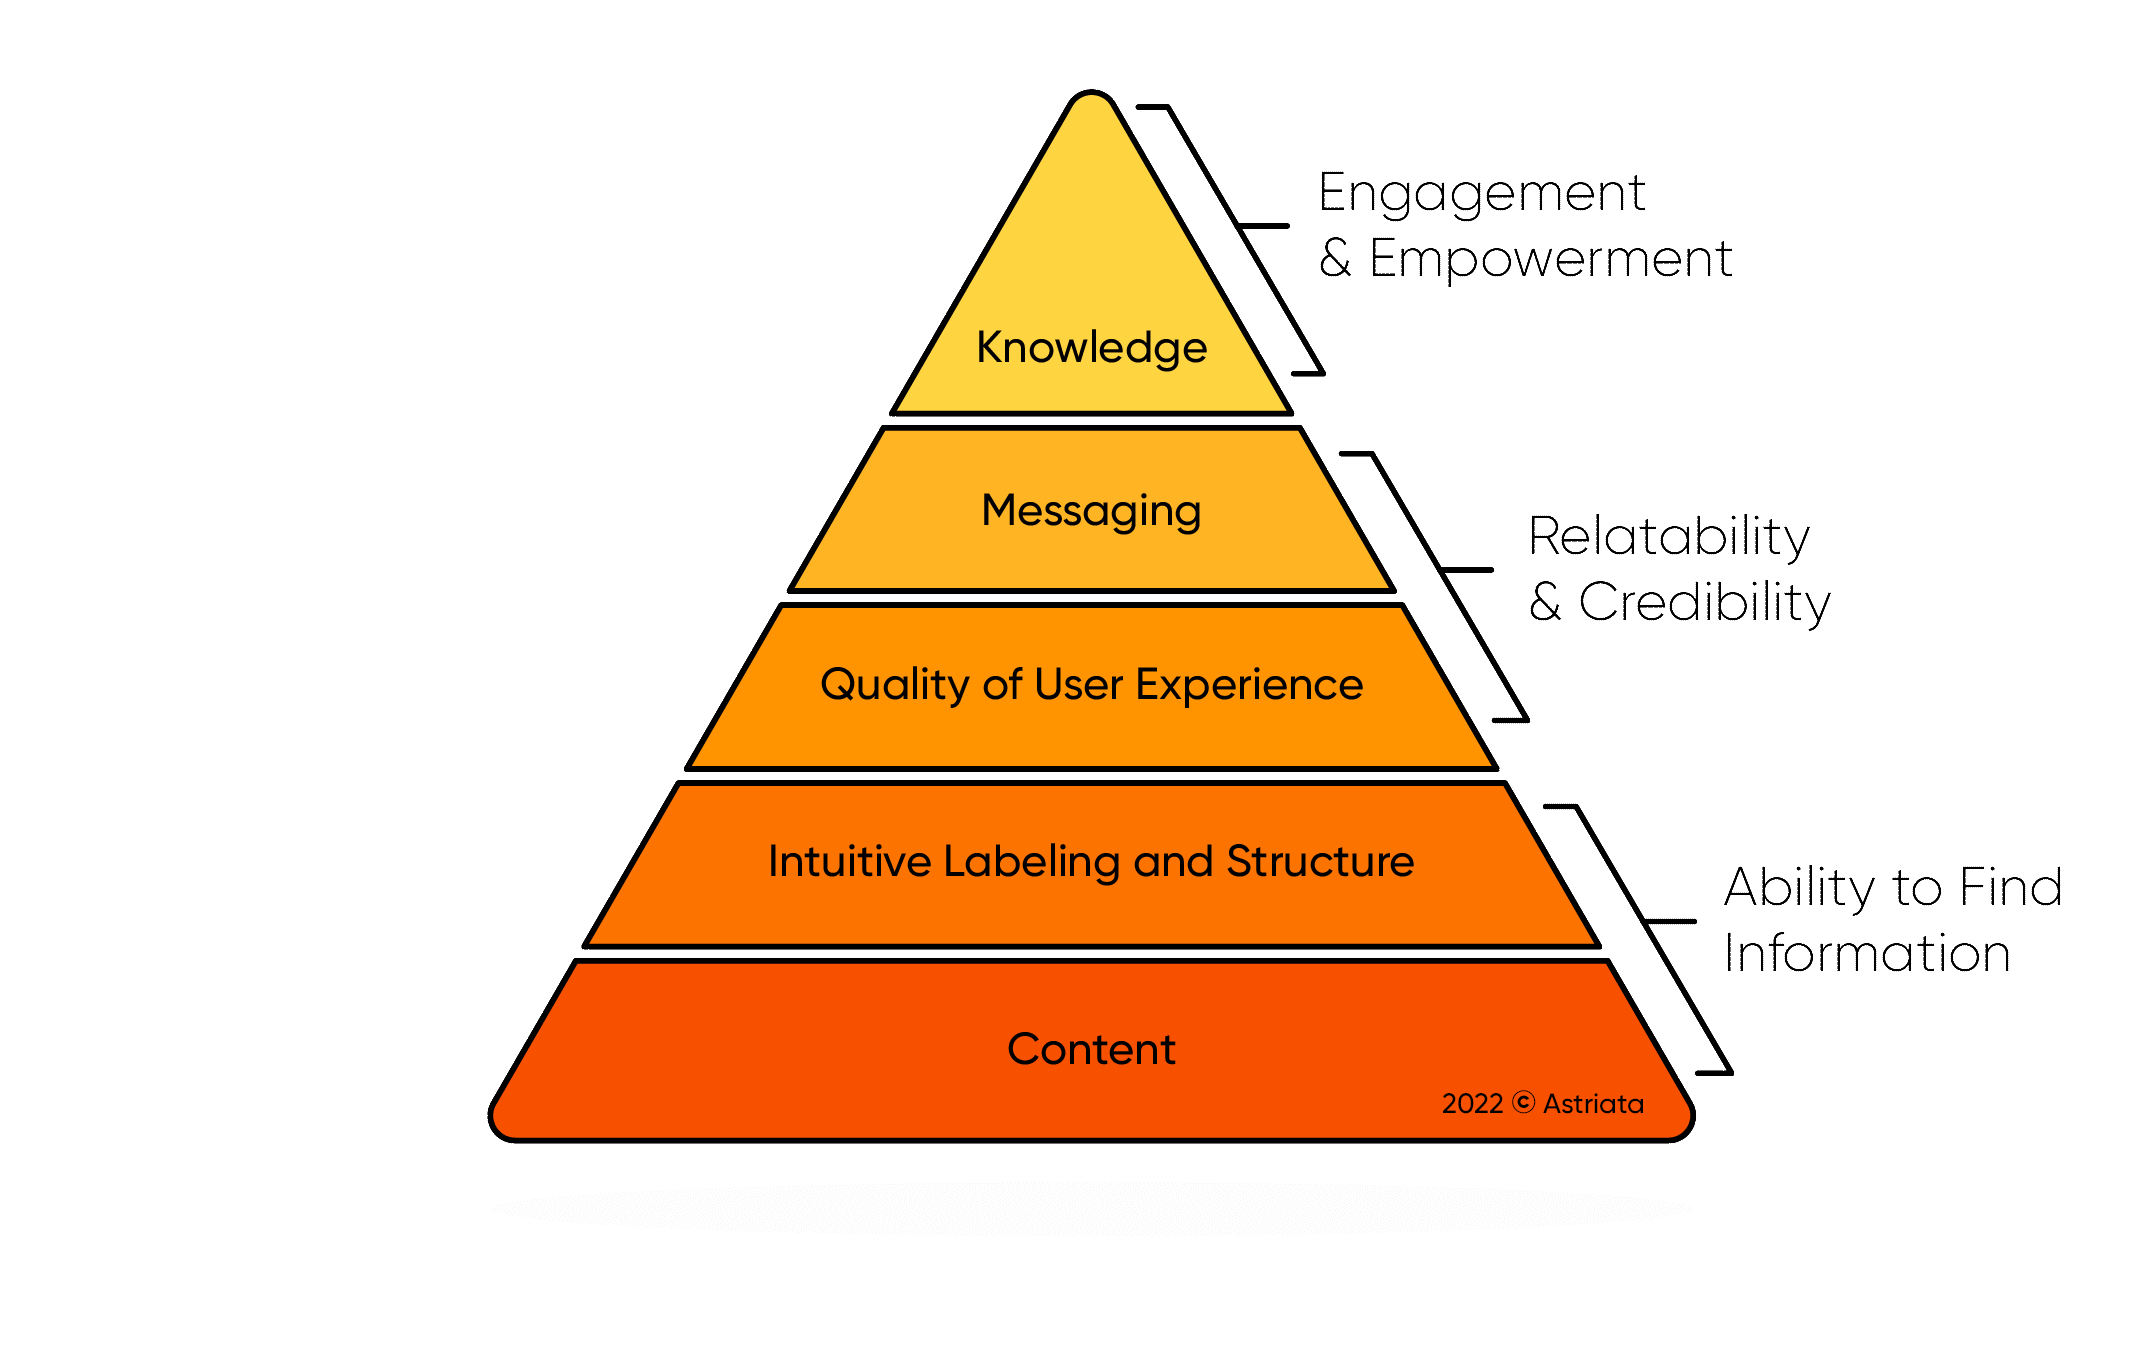 Astriata's hierarchy of website needs